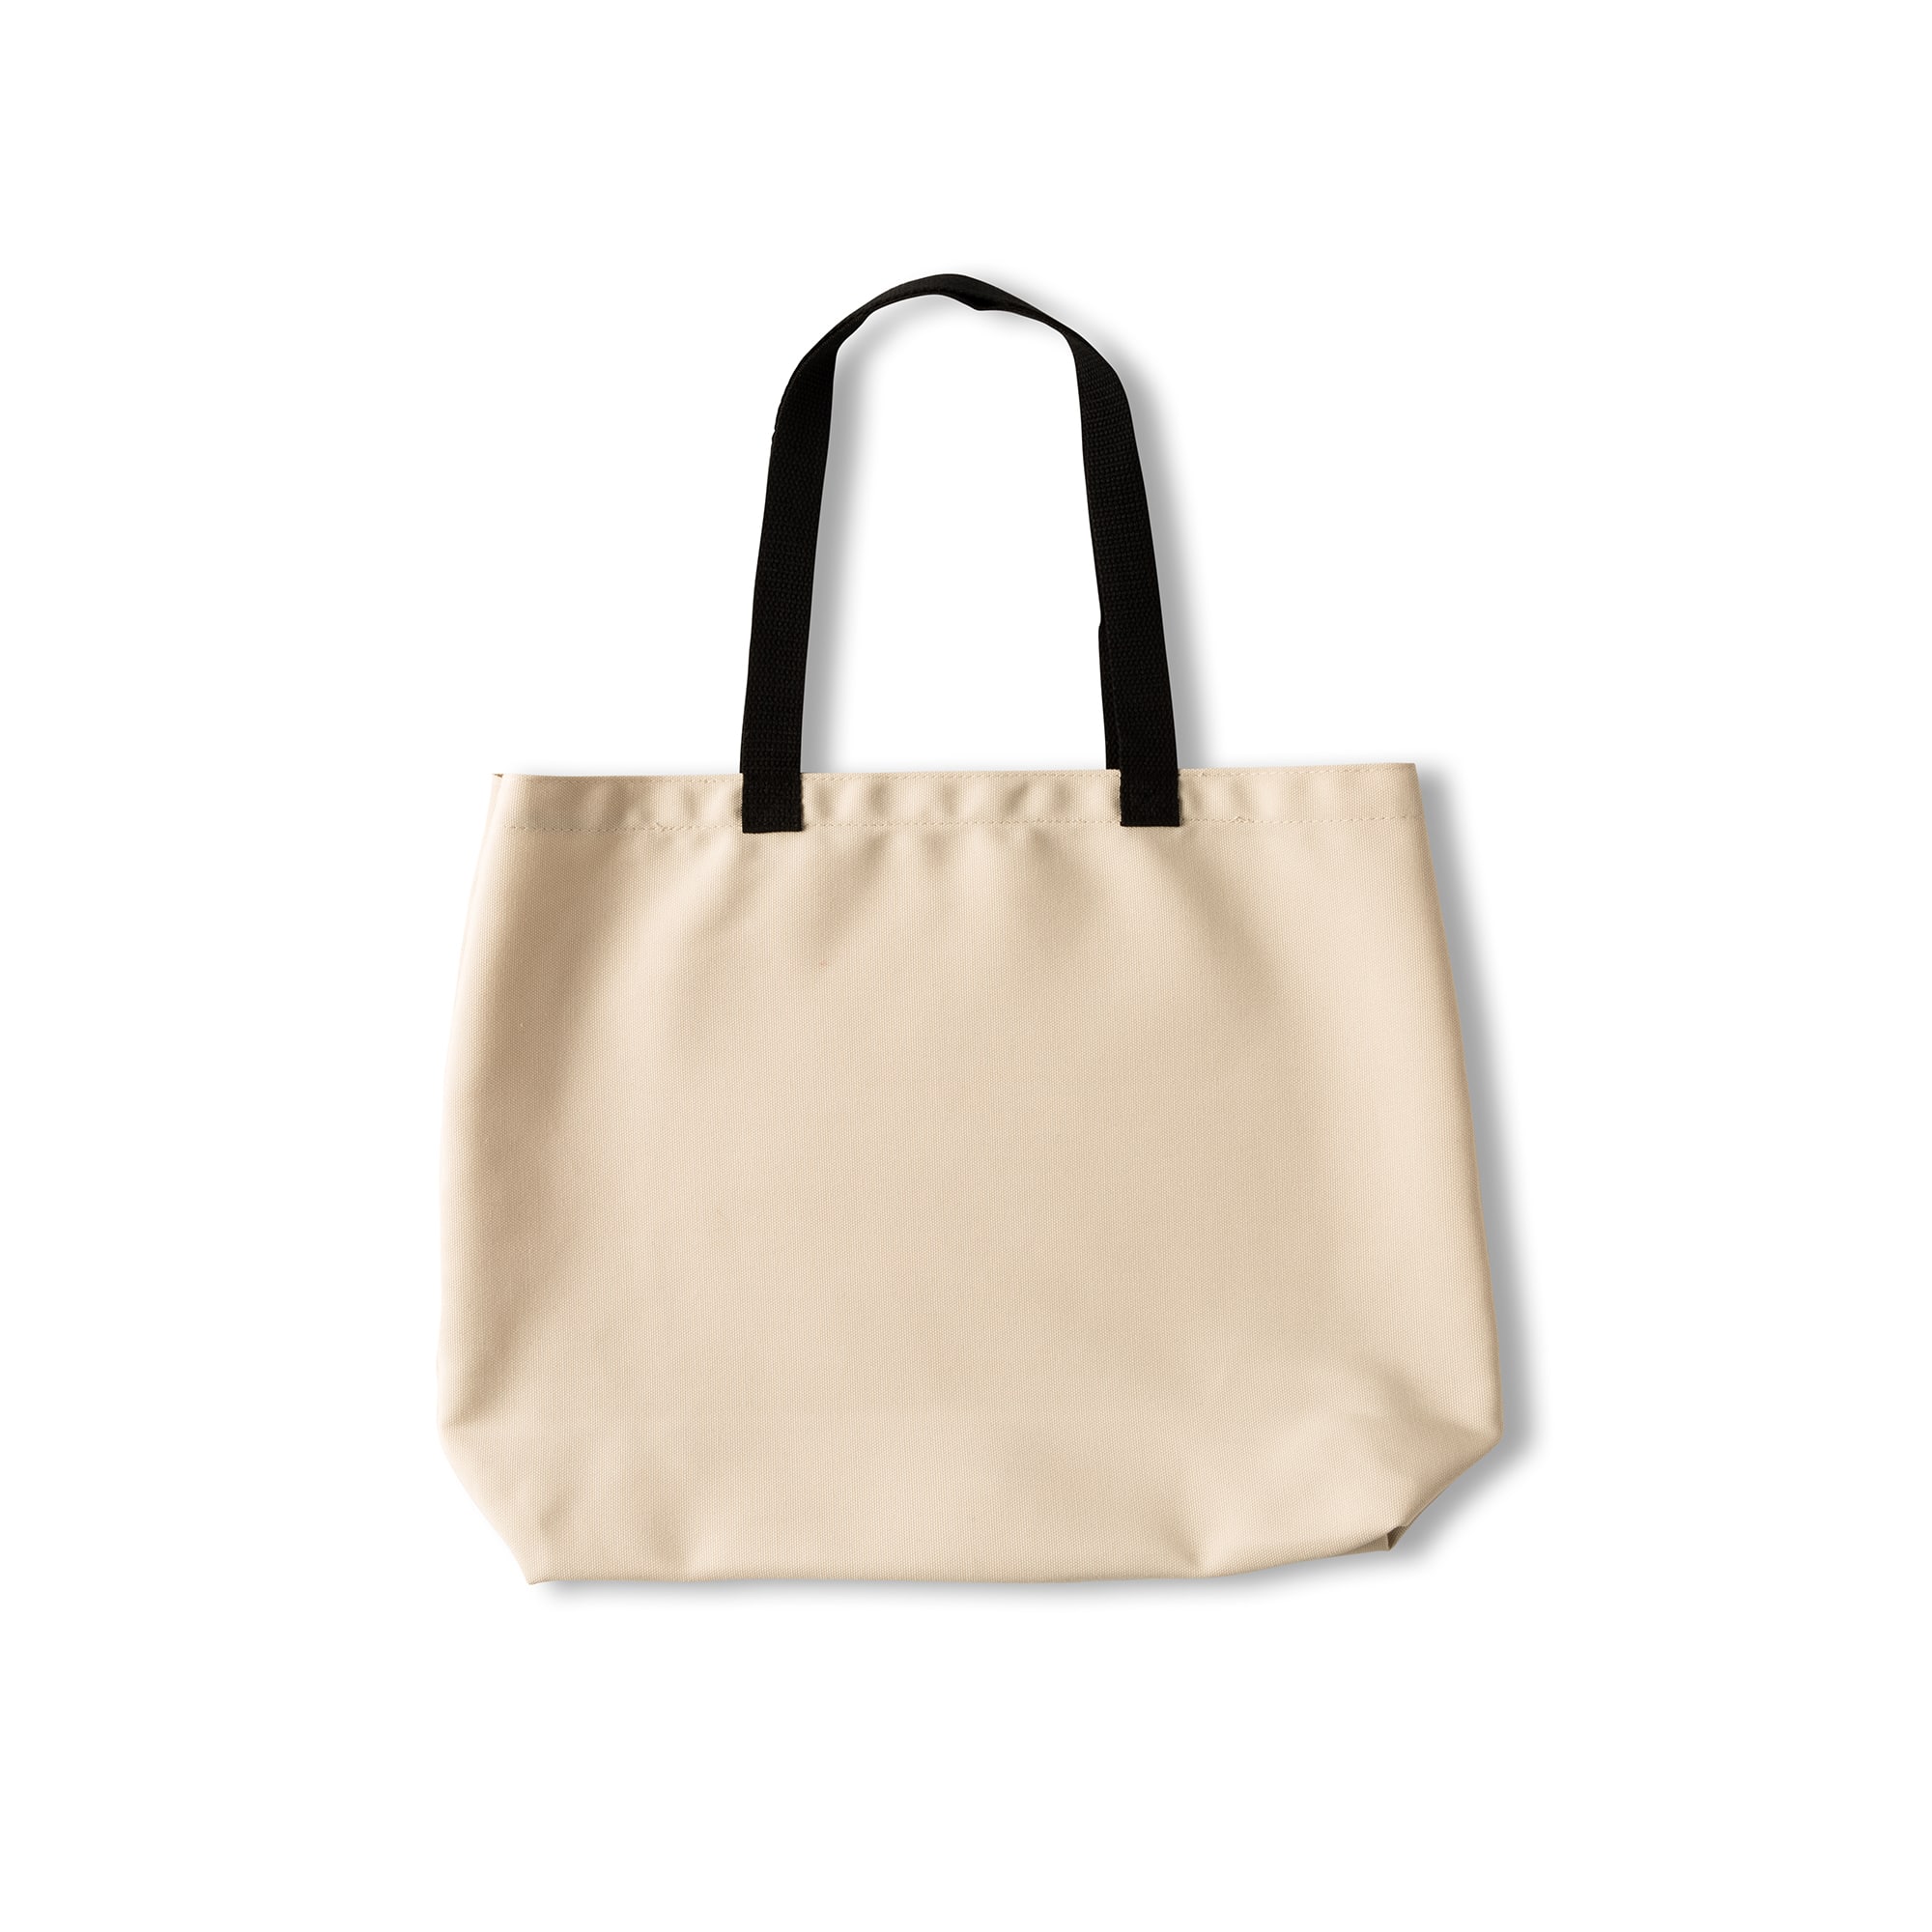 Cricut&#xAE; Large Tote Bag Blank